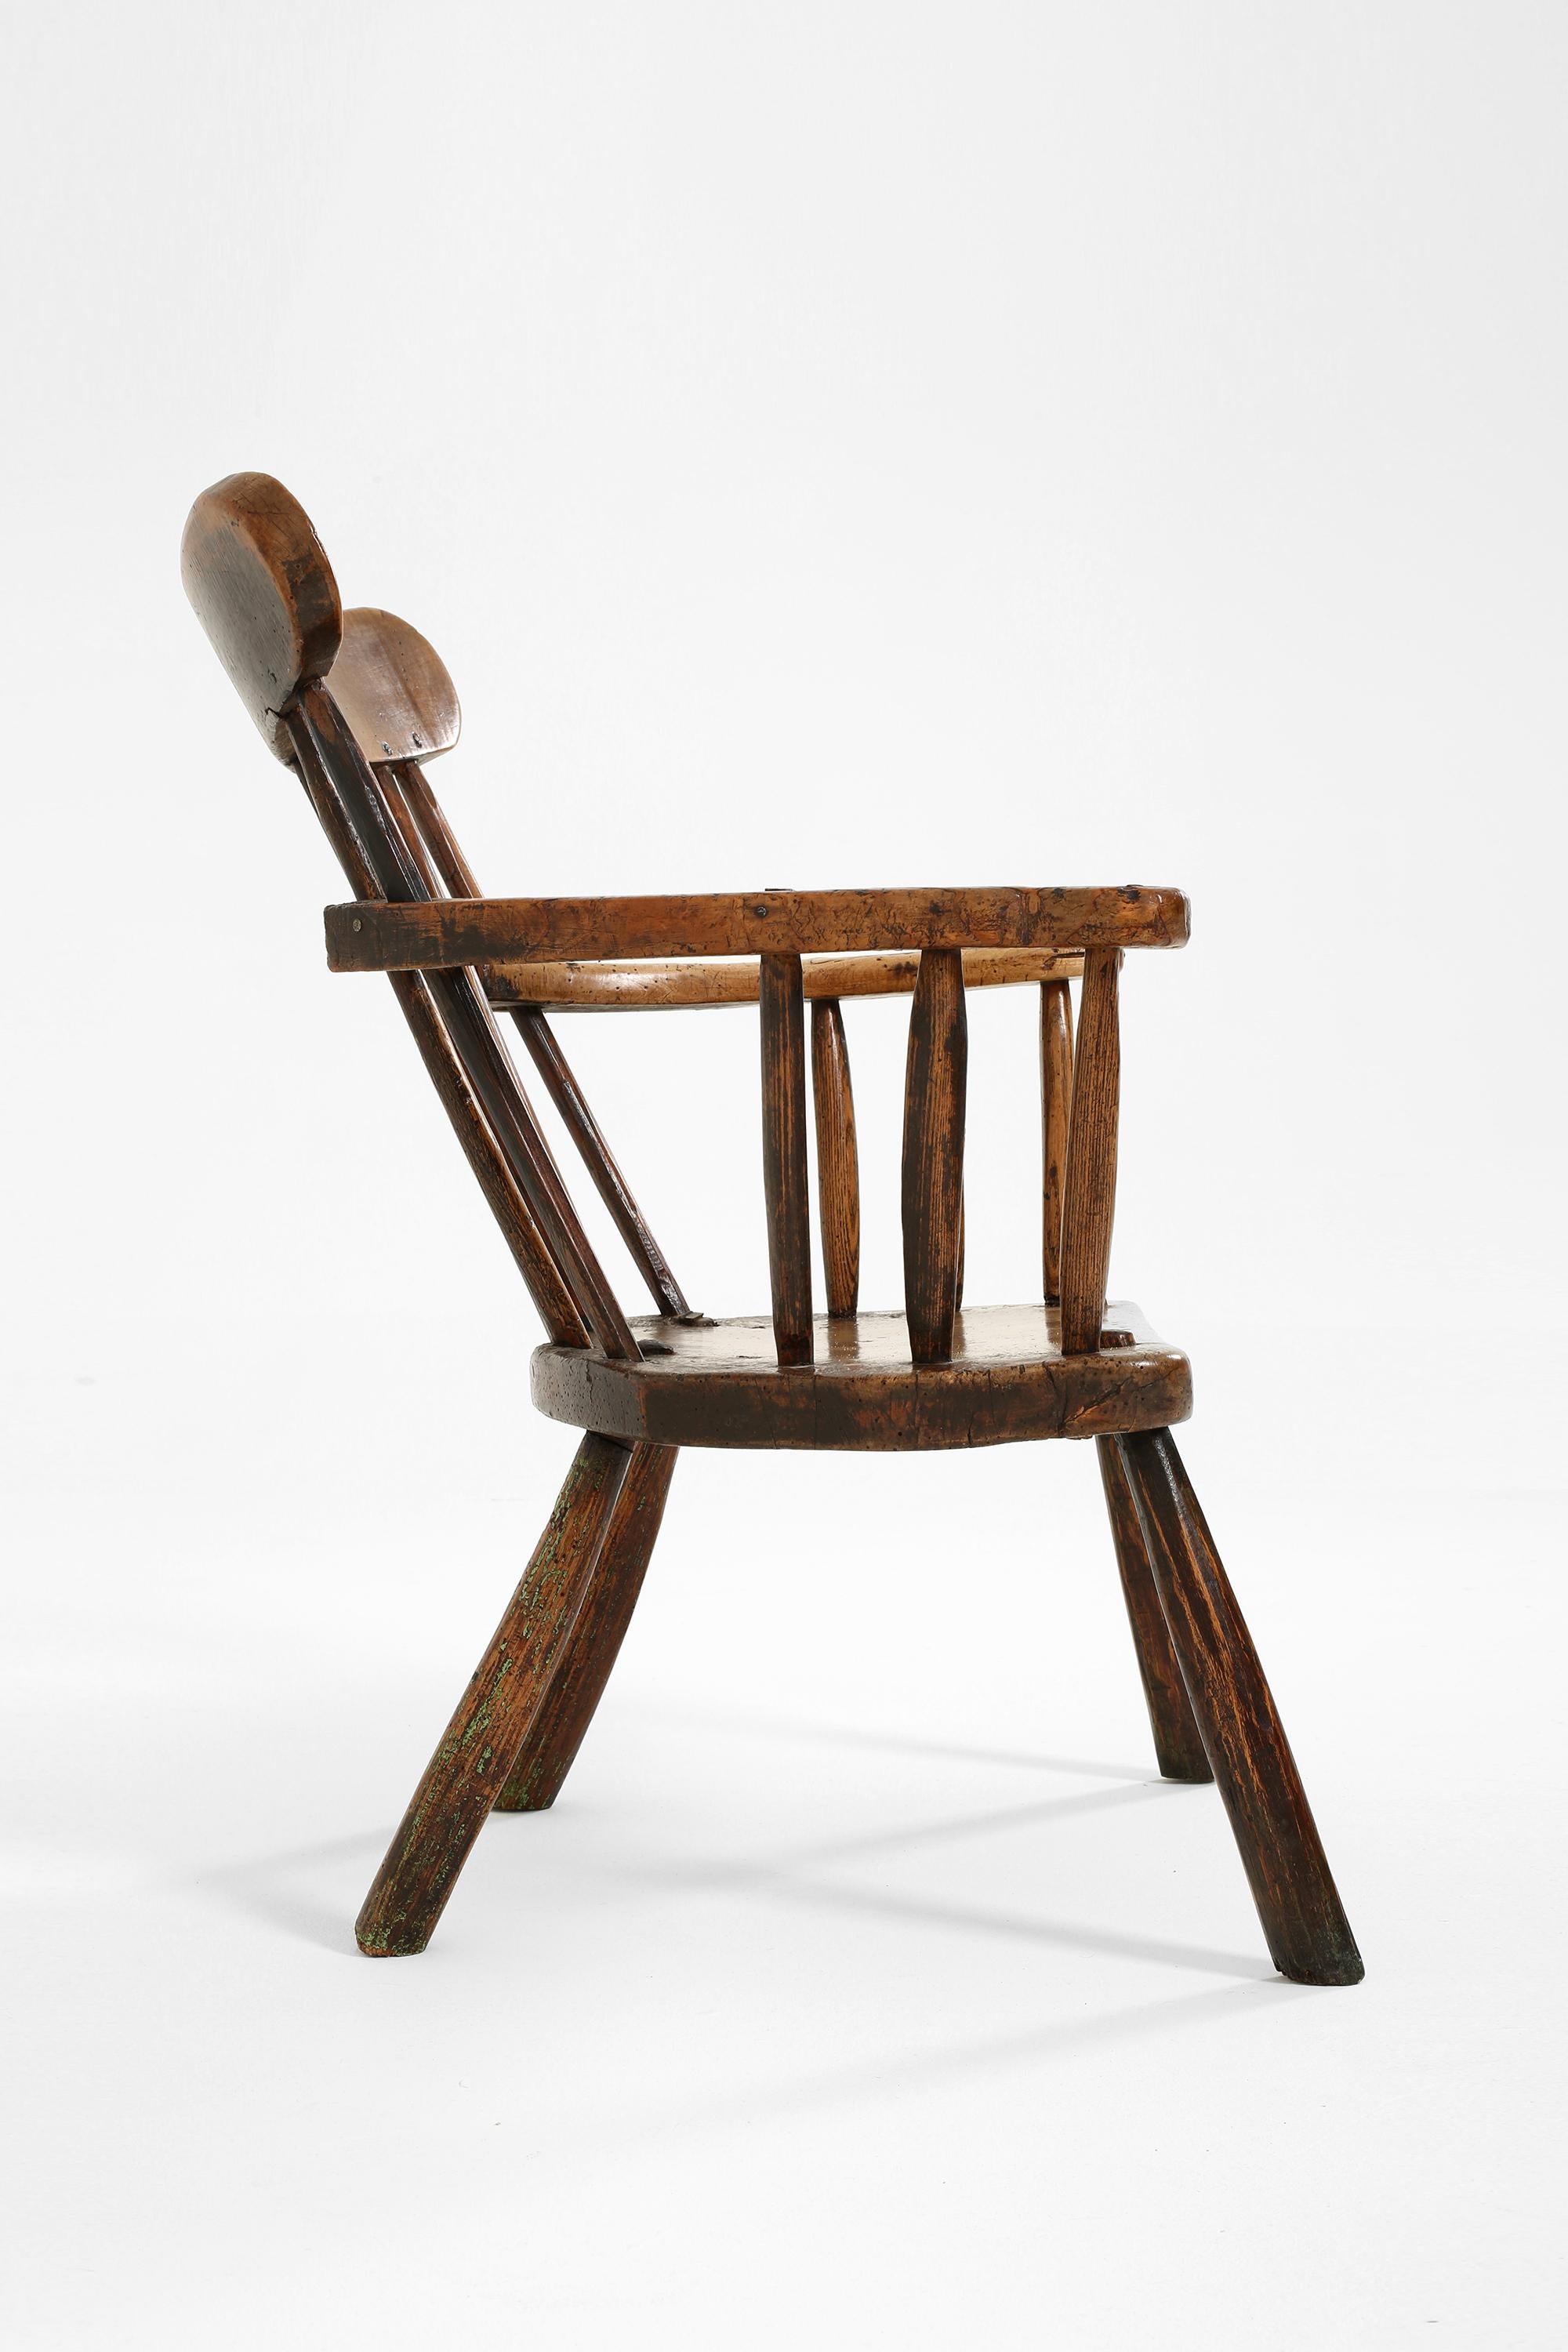 gibson chair ireland